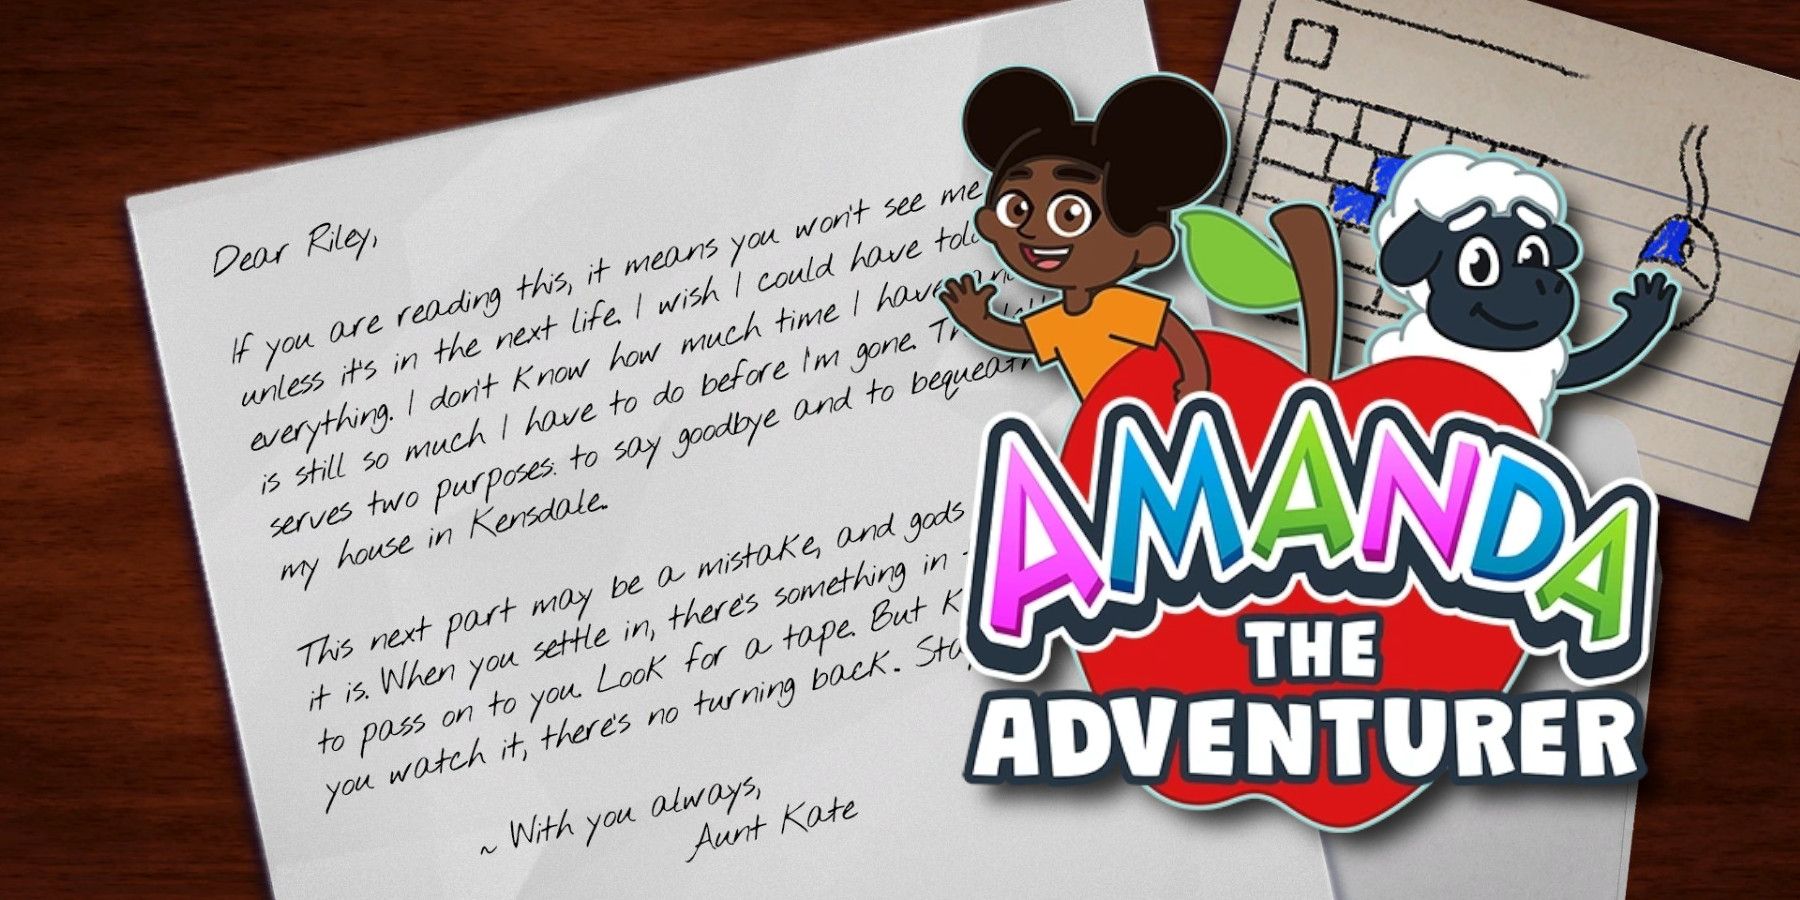 Amanda the Adventurer Explained - The Escapist